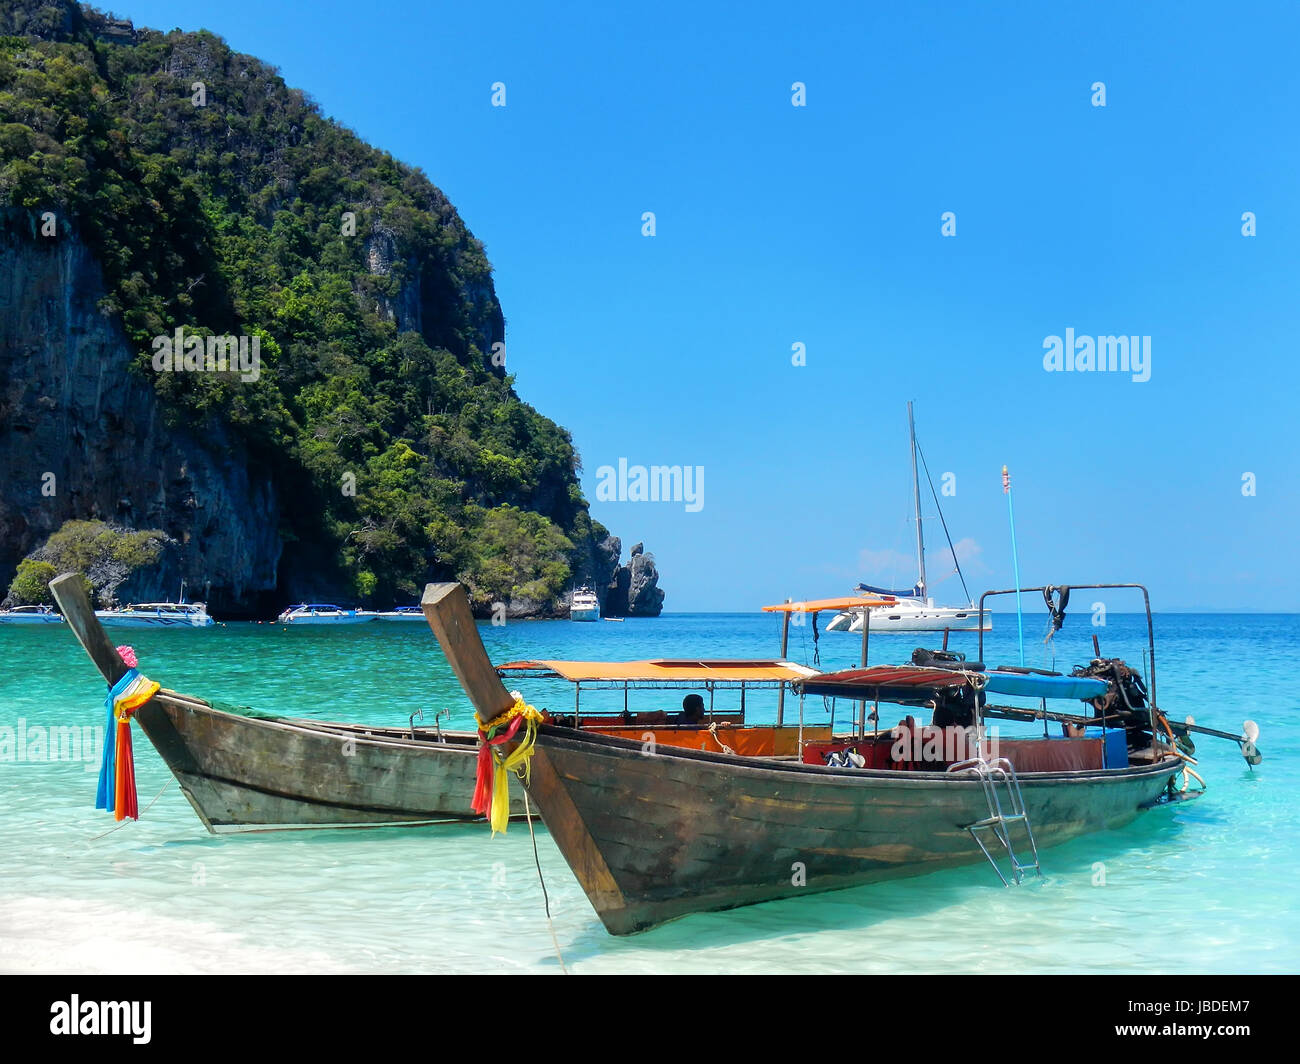 Longtail-Boote verankert in Ao Yongkasem Strand auf Phi Phi Don Island, Provinz Krabi, Thailand. Koh Phi Phi Don ist Teil eines marine National Park. Stockfoto